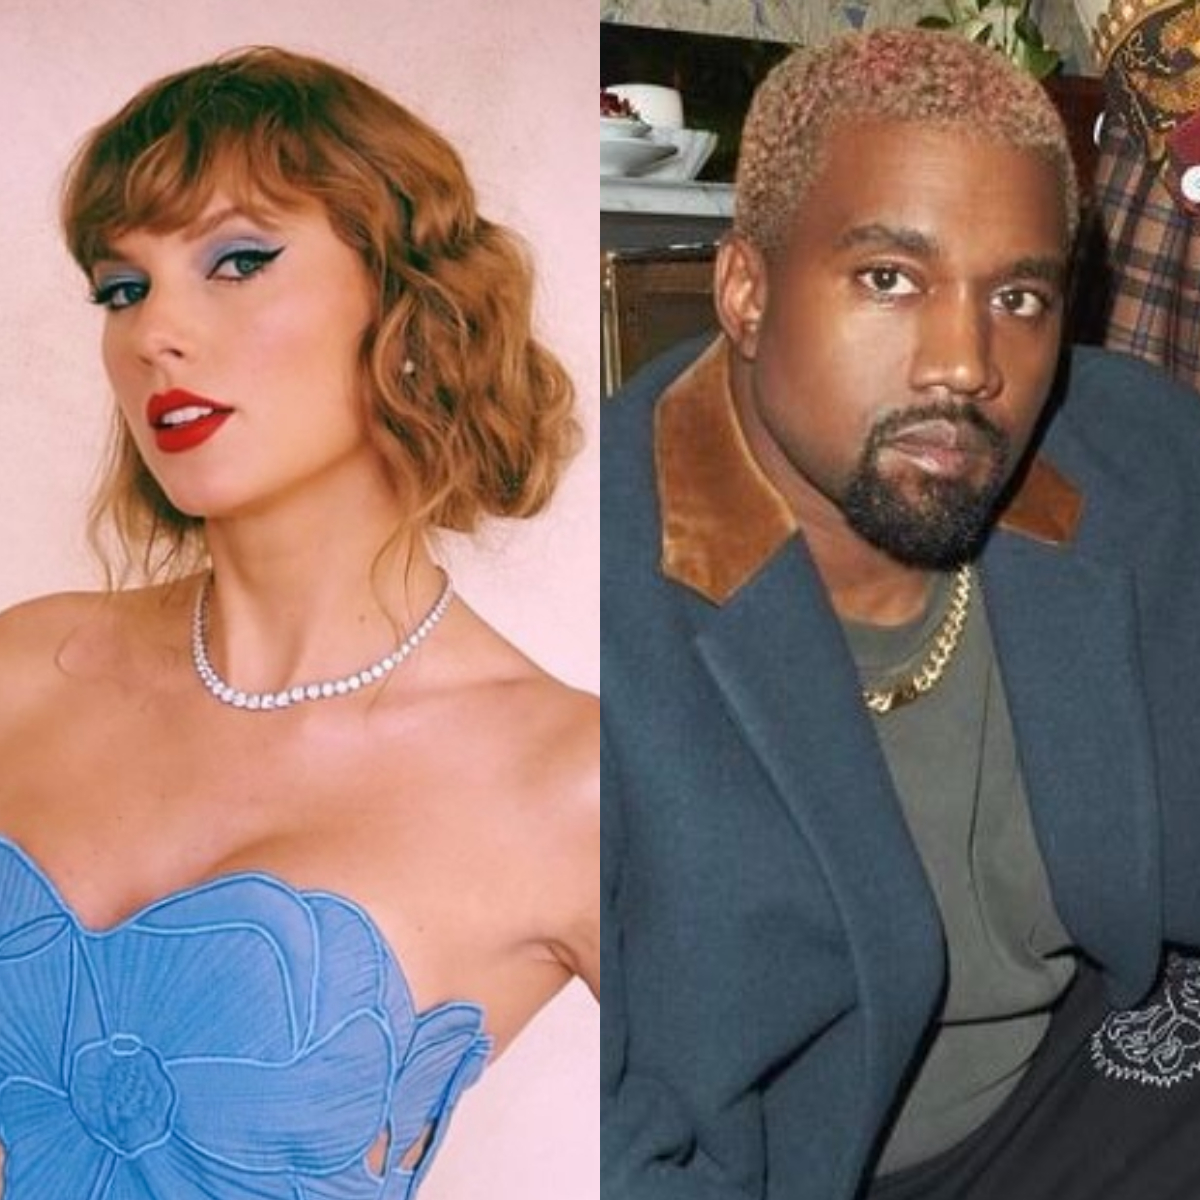 Taylor Swift slams Kim Kardashian in feud over Kanye West's 'Famous